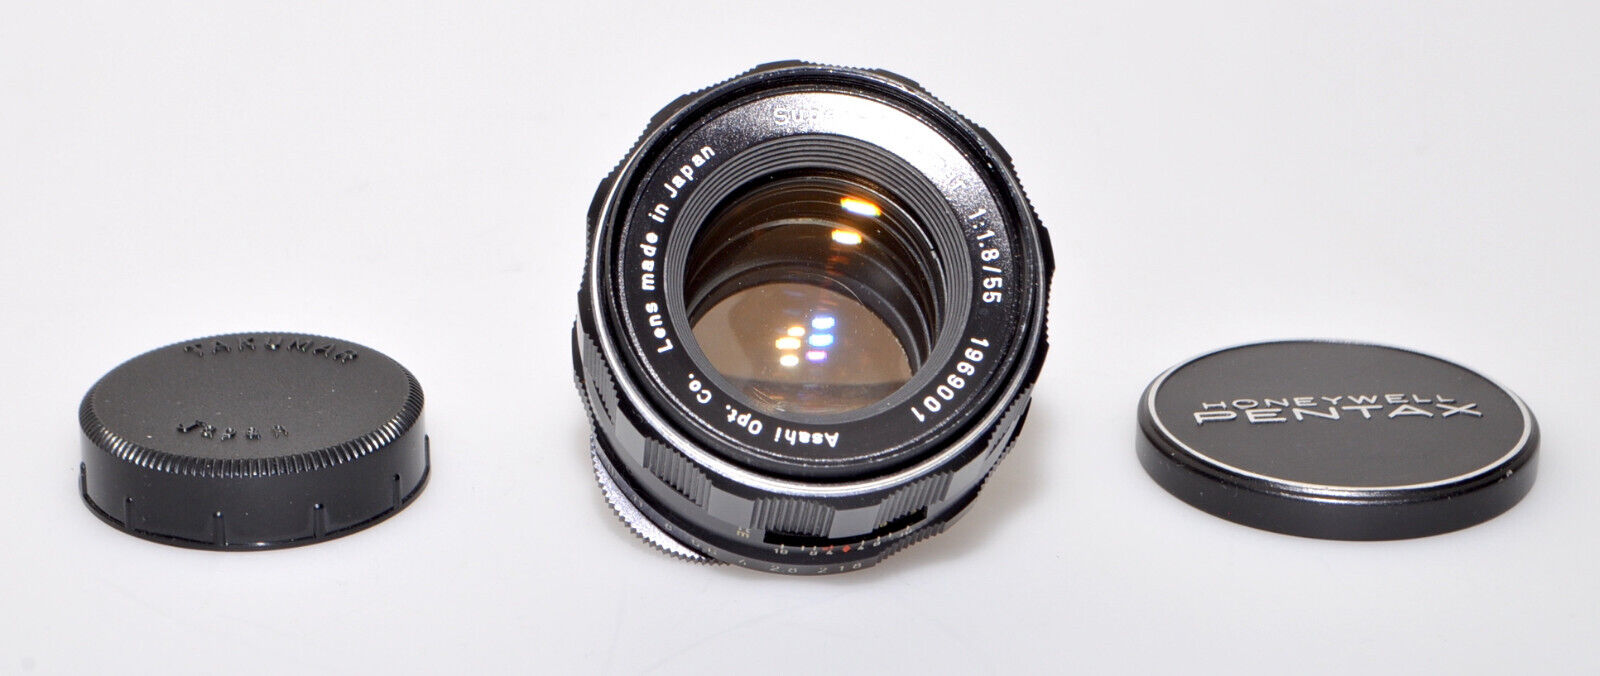 PENTAX SMC Super-Takumar 55mm f/1.8 Lens for sale online | eBay